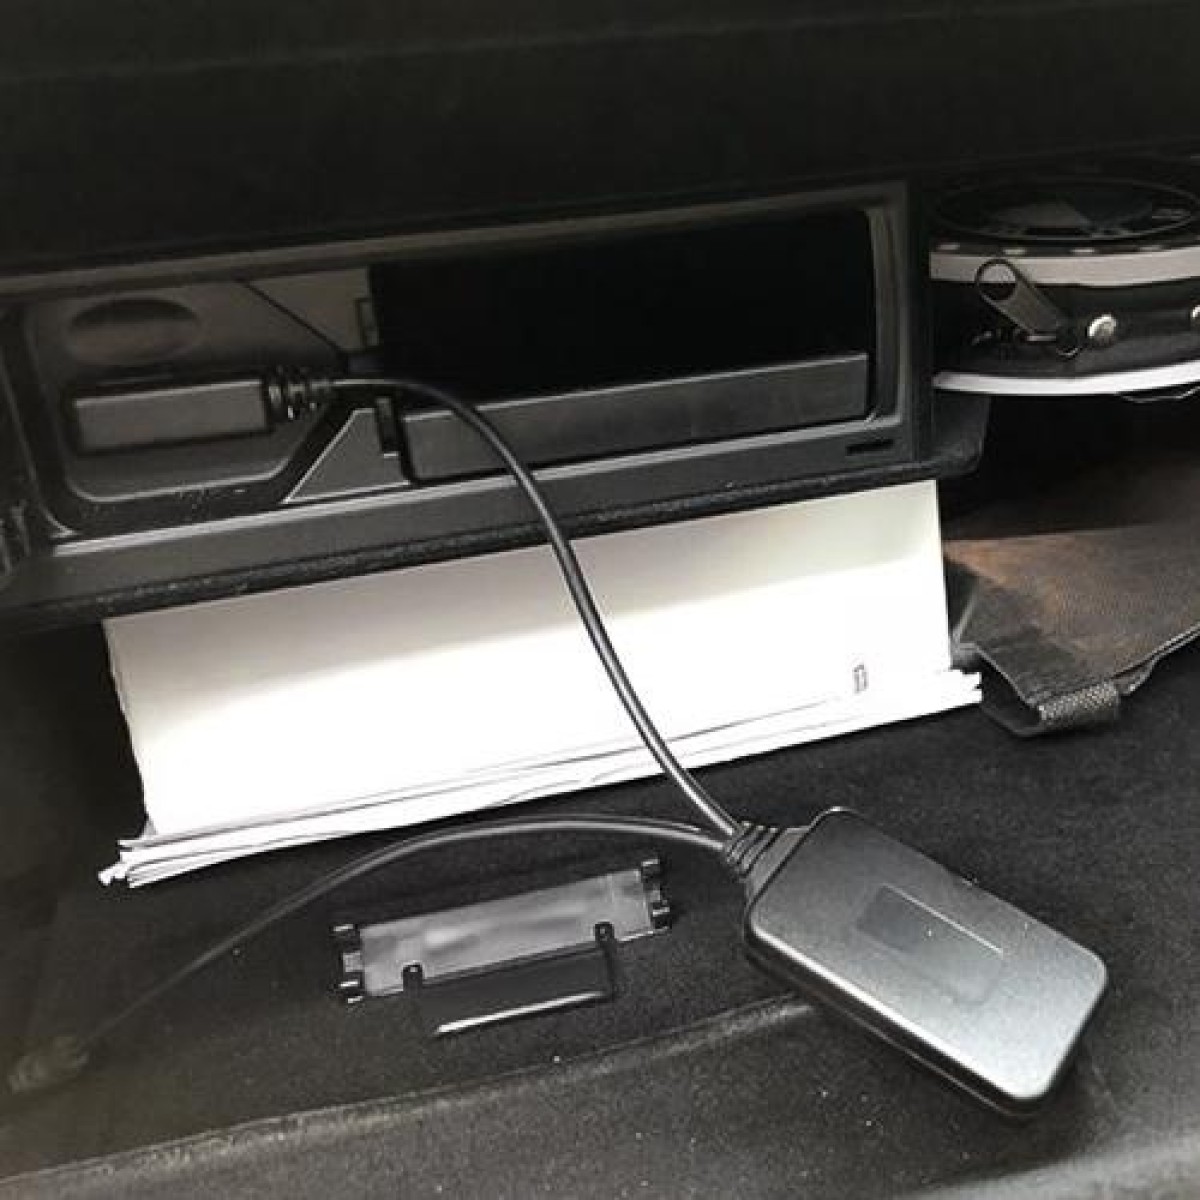 Car Wireless AMI MMI2G Bluetooth Audio Cable USB Interface Wiring Harness for Audi Q7 A6L A8L A4L